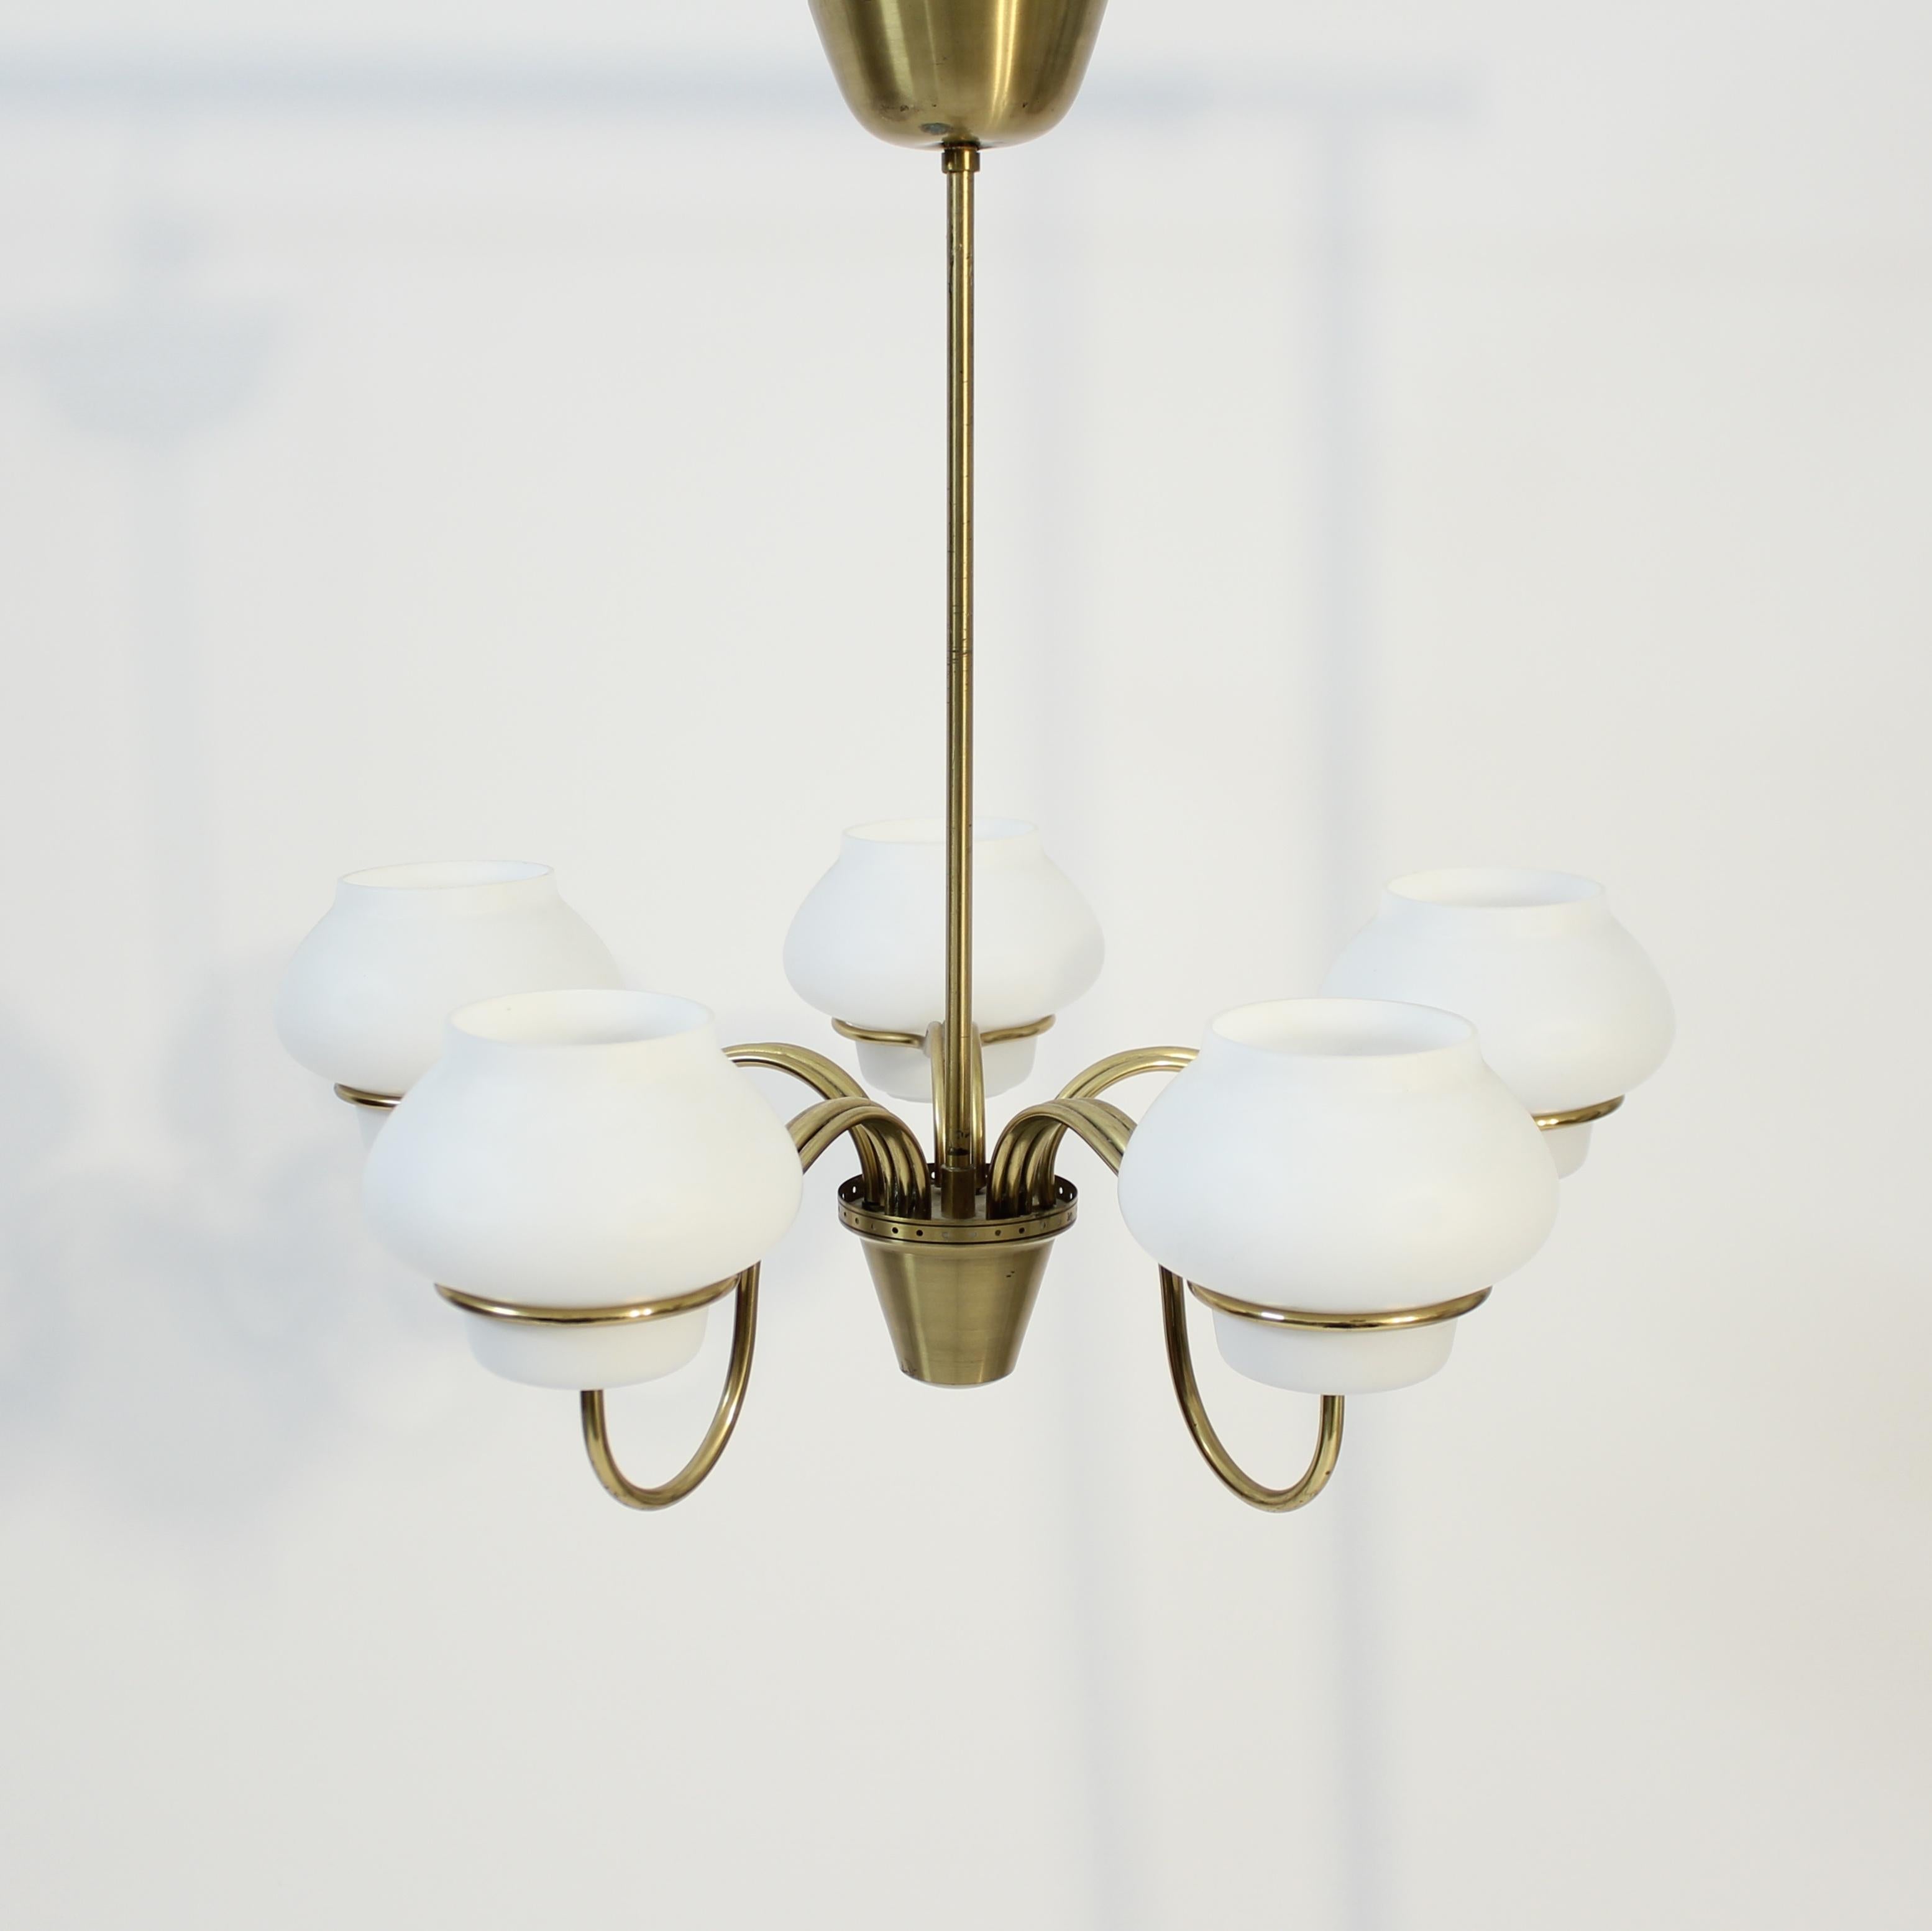 20th Century Swedish Modern chandelier attributed to Gunnar Asplund for ASEA, 1950s